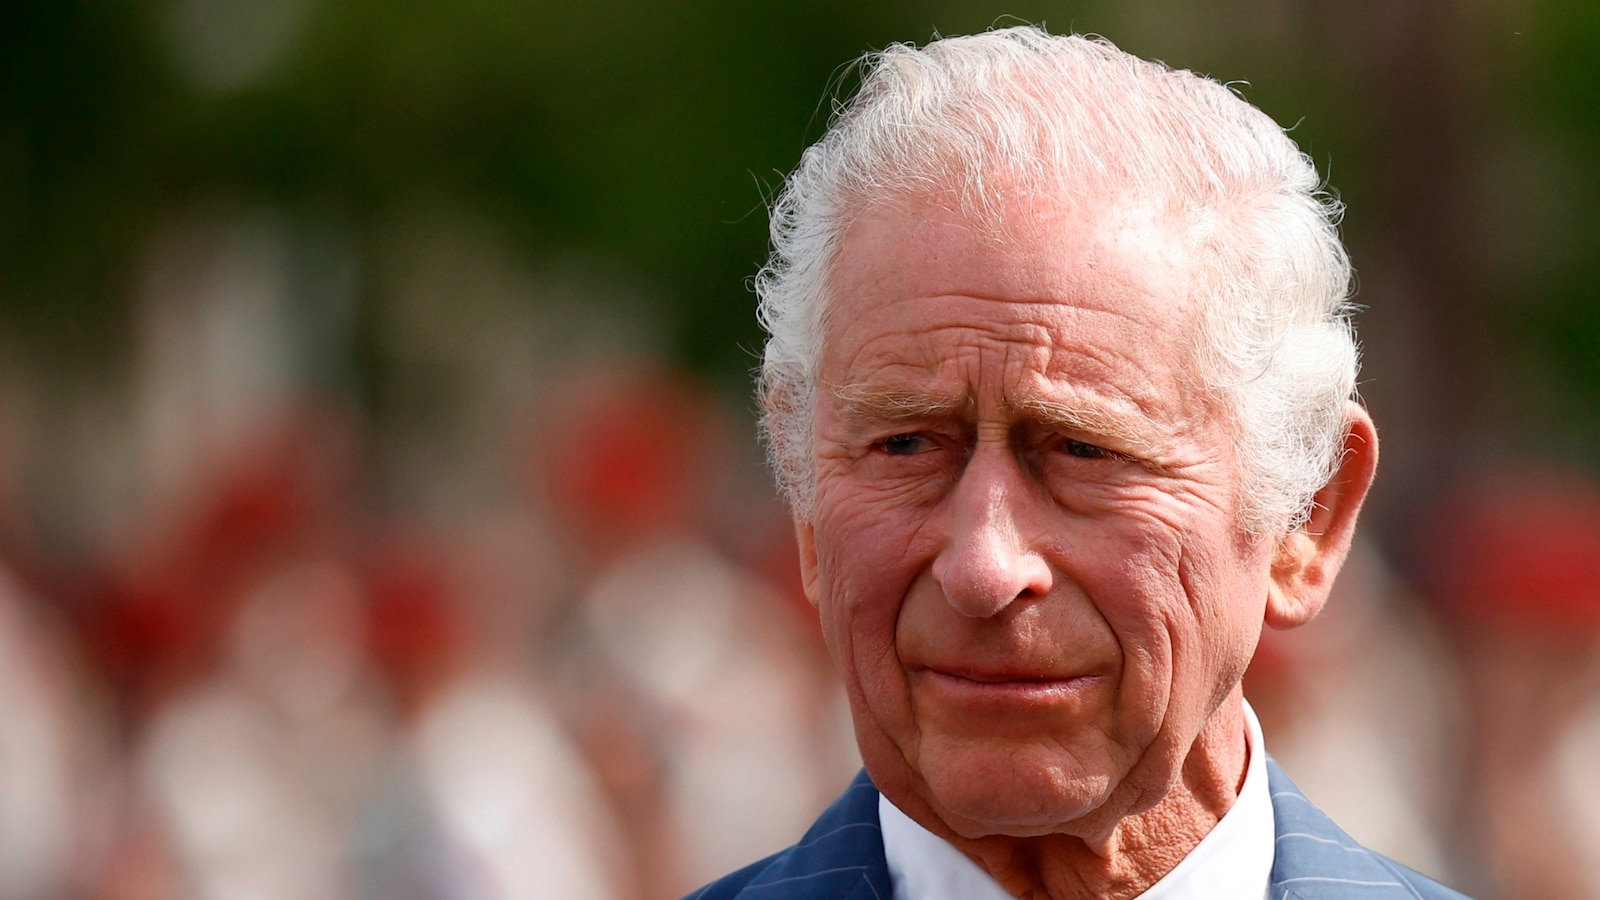 King Charles III seeks medical treatment at a London hospital